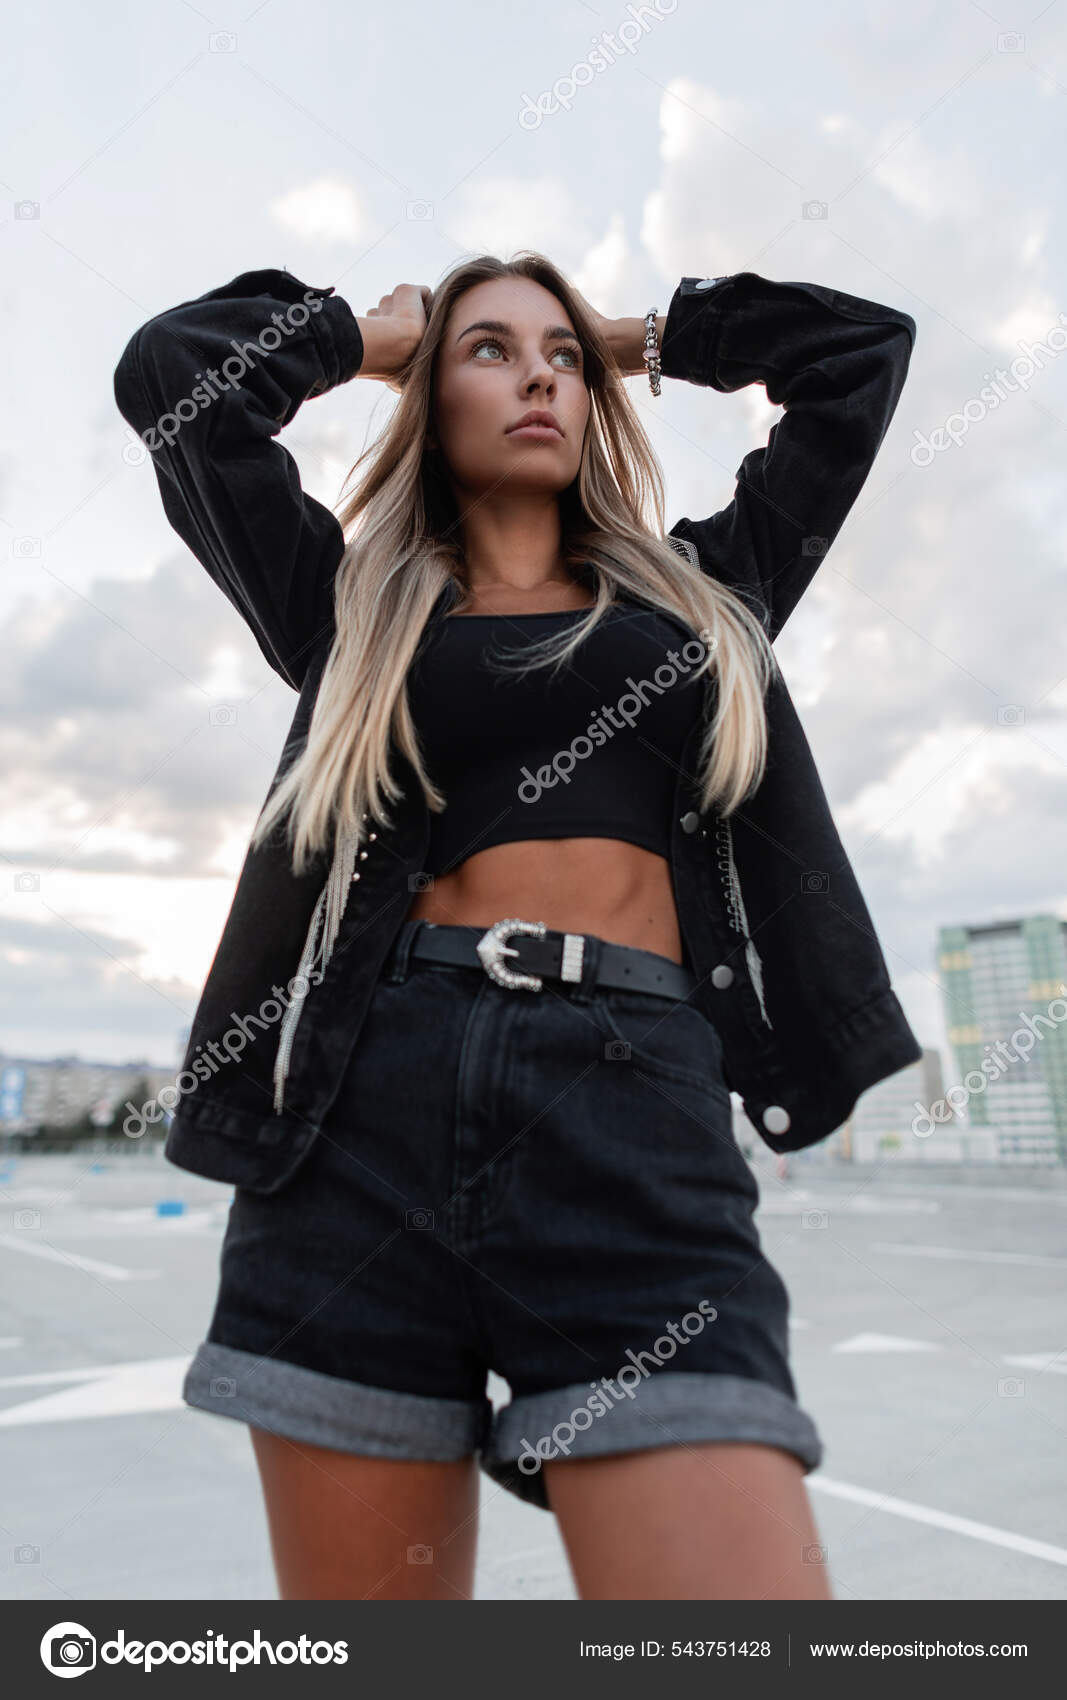 https://st.depositphotos.com/3323581/54375/i/1600/depositphotos_543751428-stock-photo-fashion-beautiful-woman-model-black.jpg